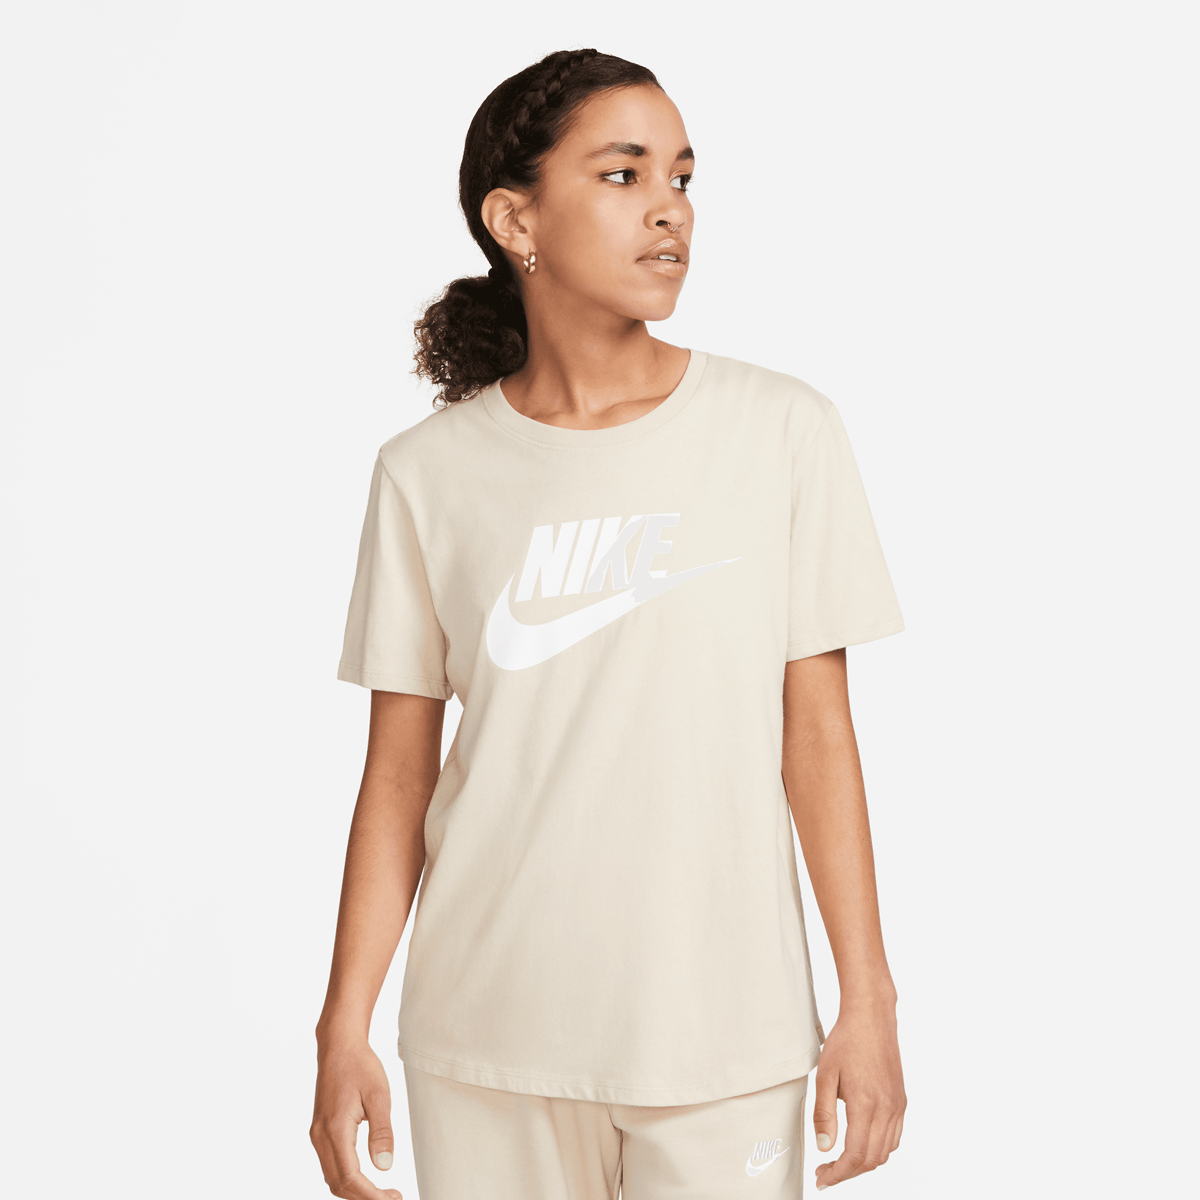 NIKE Sportswear Essentials Logo T-shirt, T-Shirts, Abbigliamento, sanddrift/white, Dimensione: XL, dimensioni disponibili:XS,S,M,L,XL product